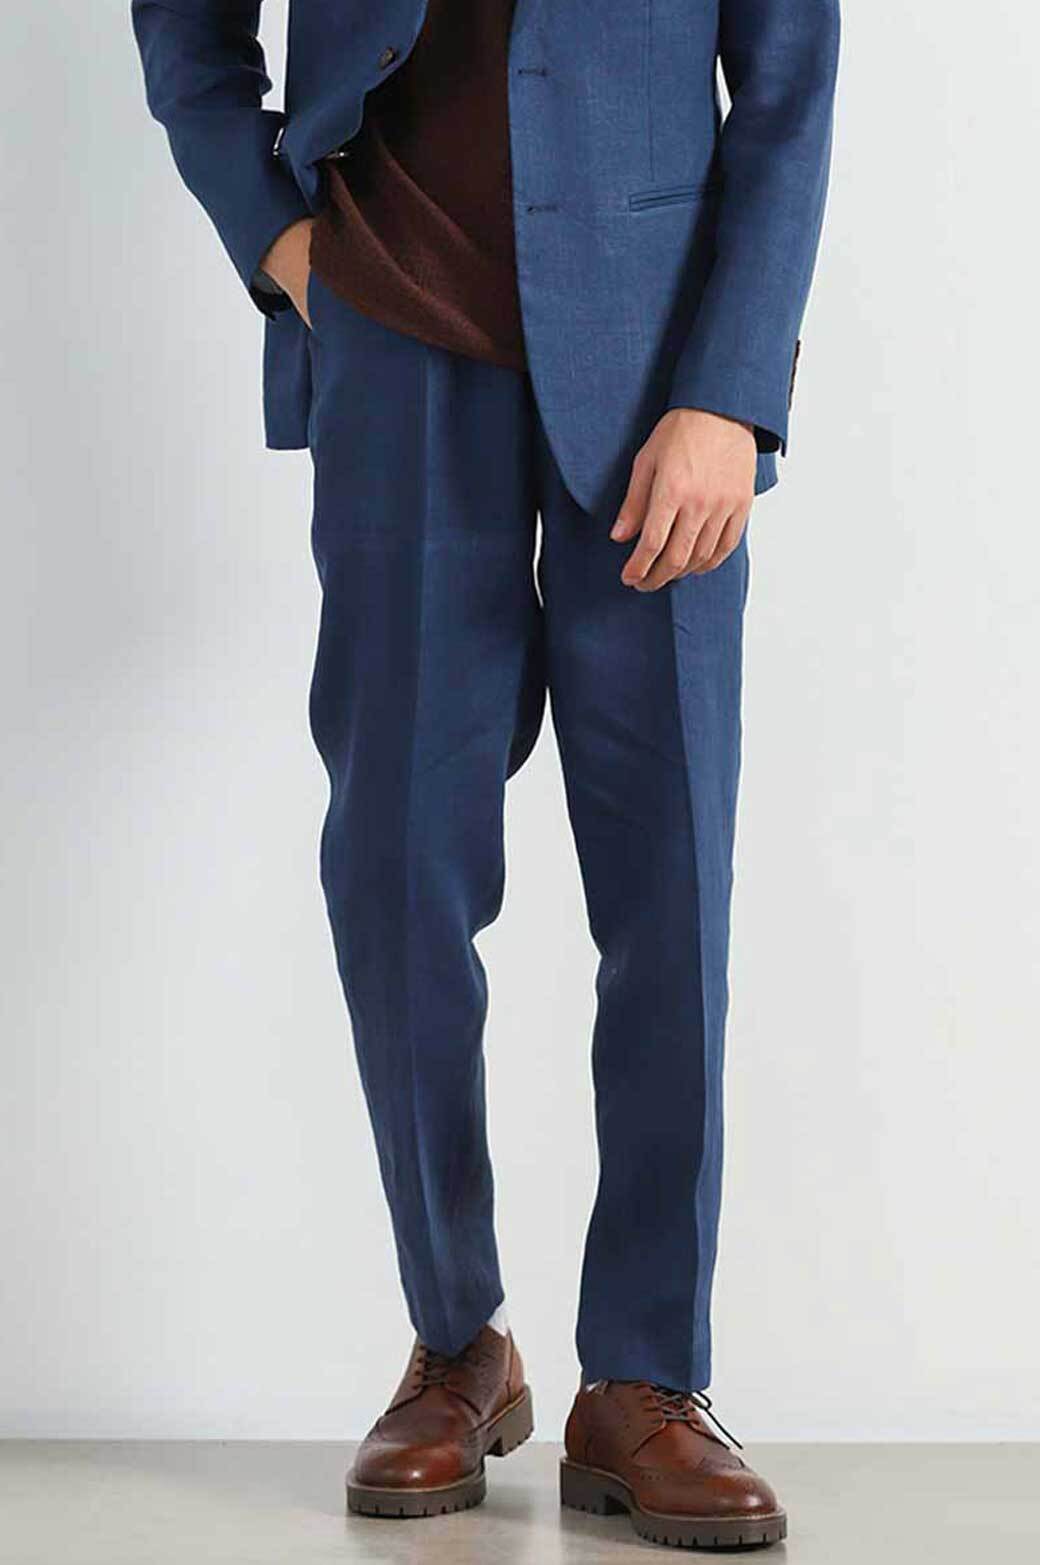 navy blue blazer and grey pants